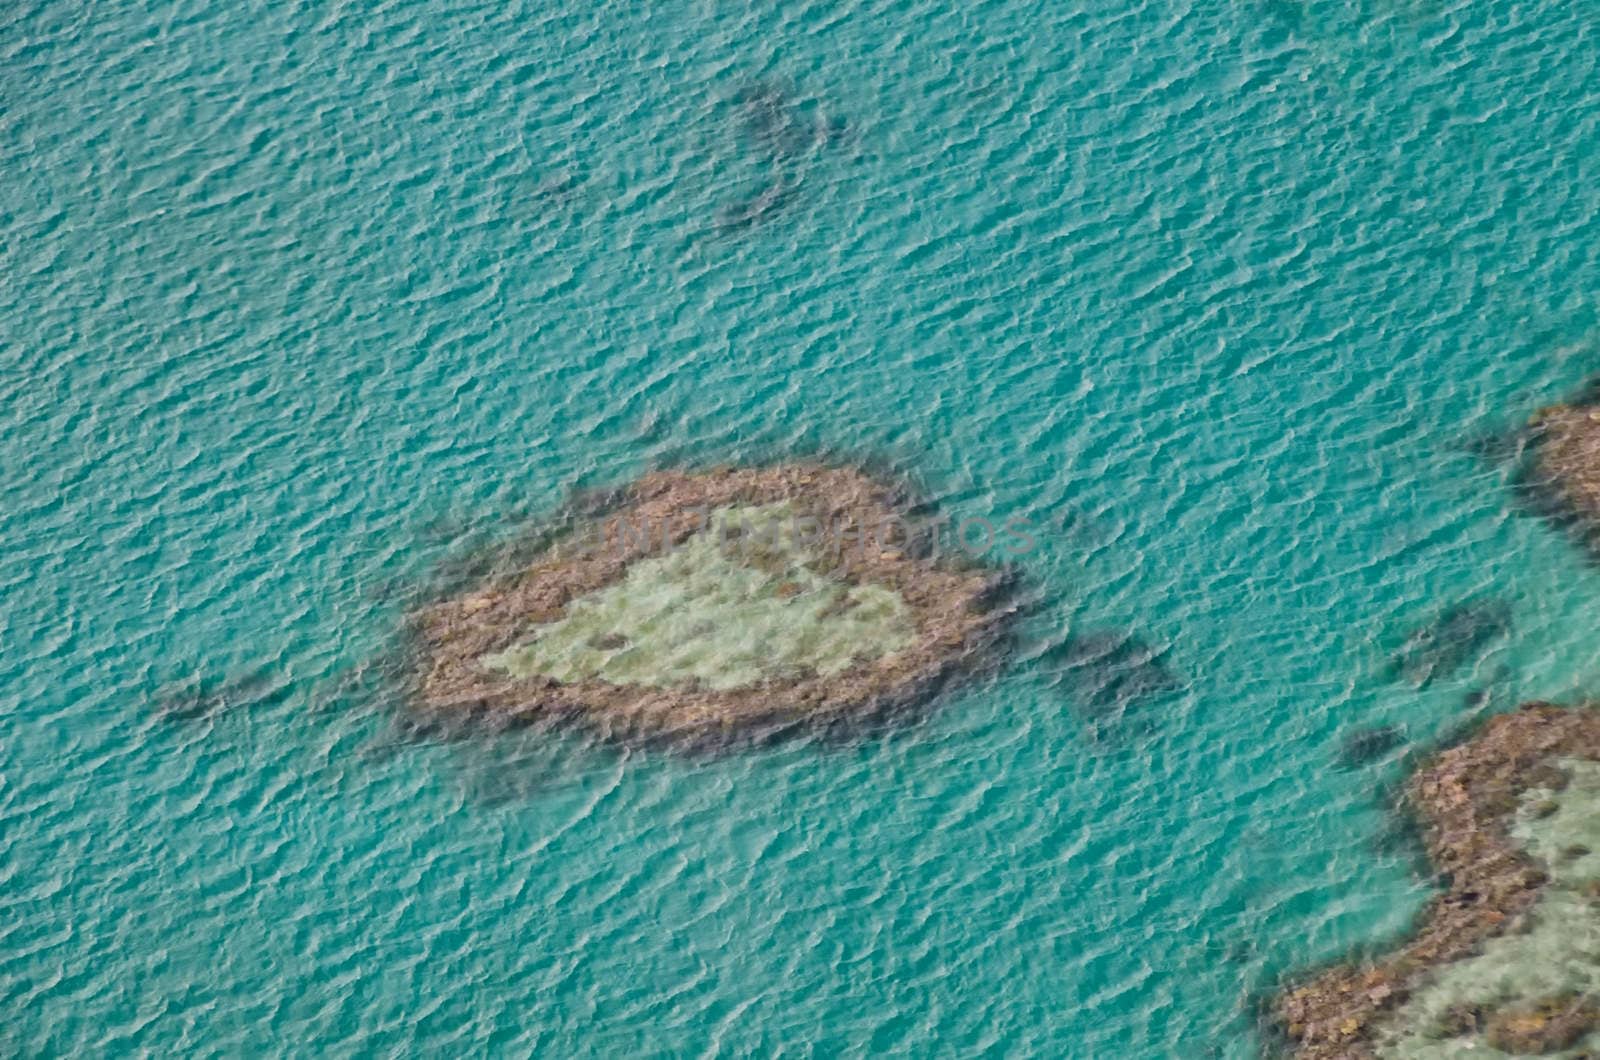 Heart Reef - Australia by mroz